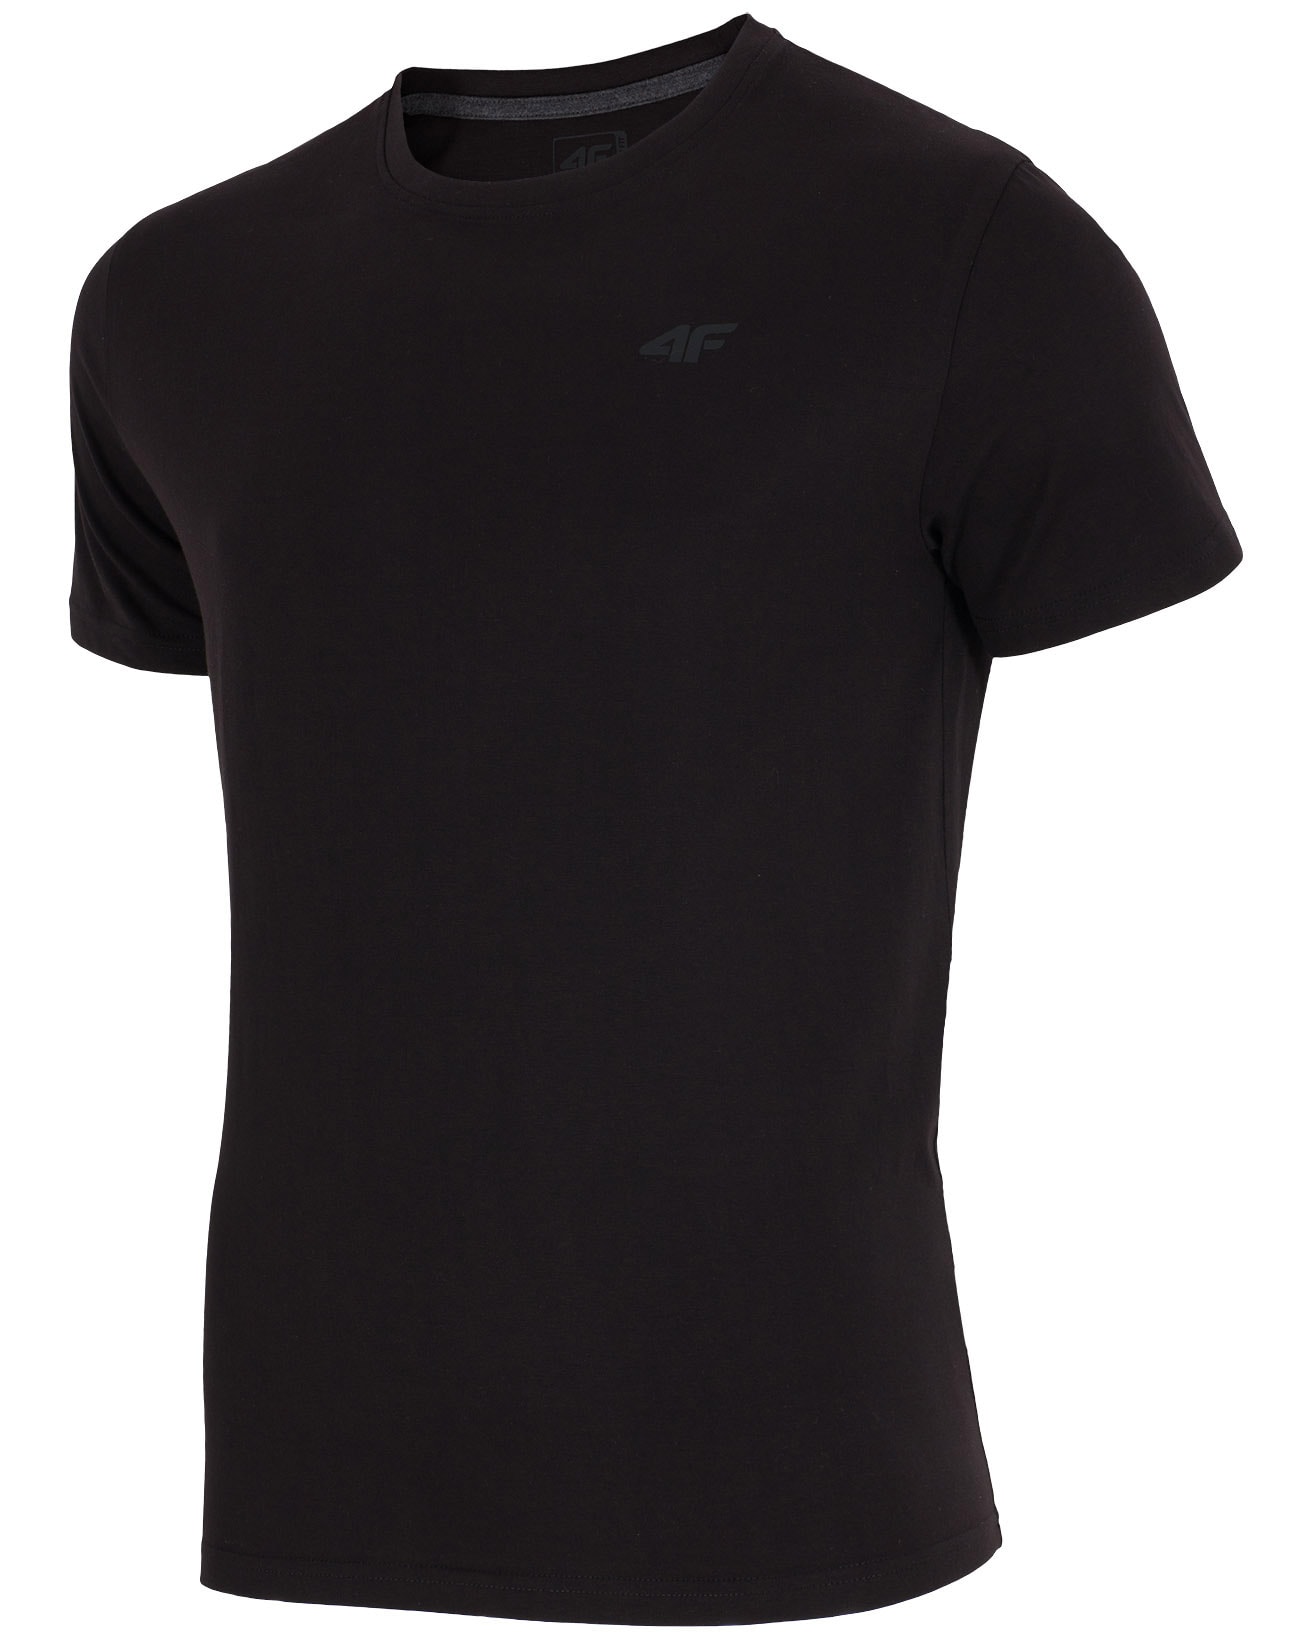 4F T-Shirt - Black